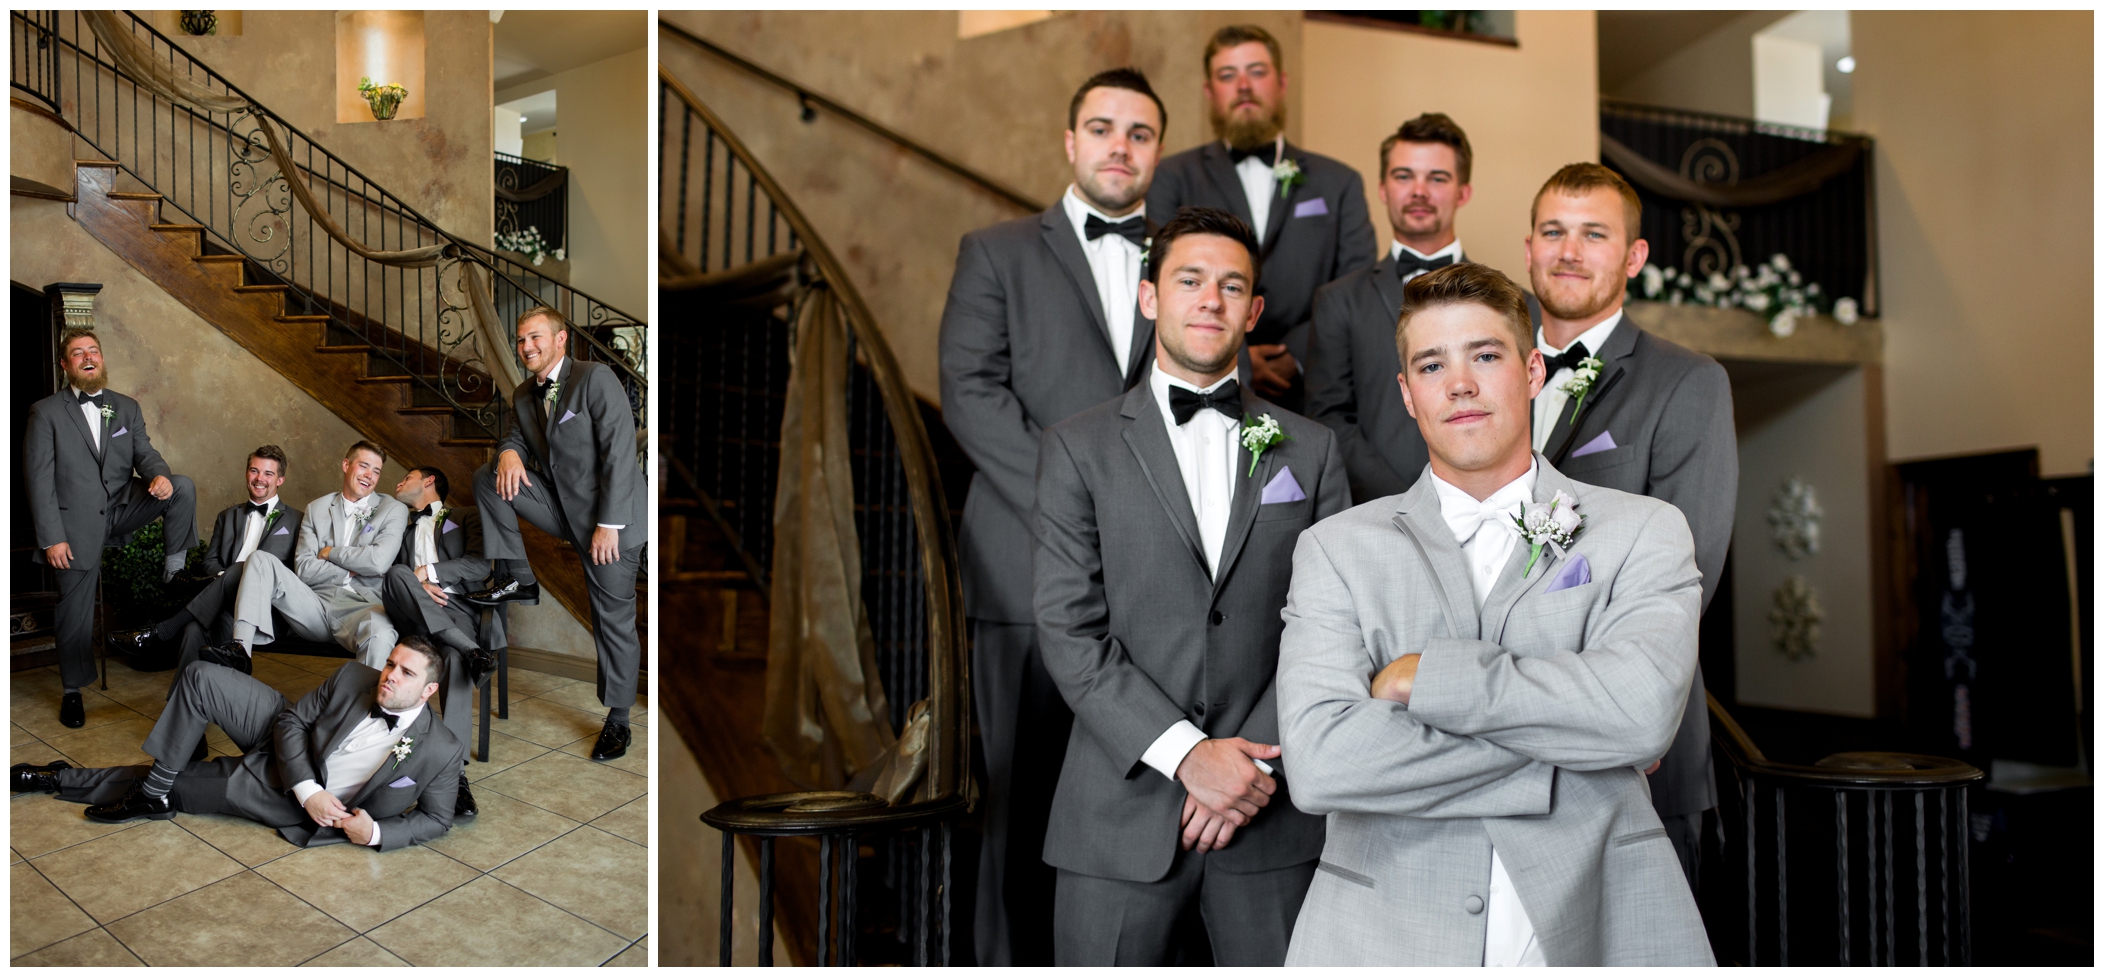 funny groomsmen photos on staircase 